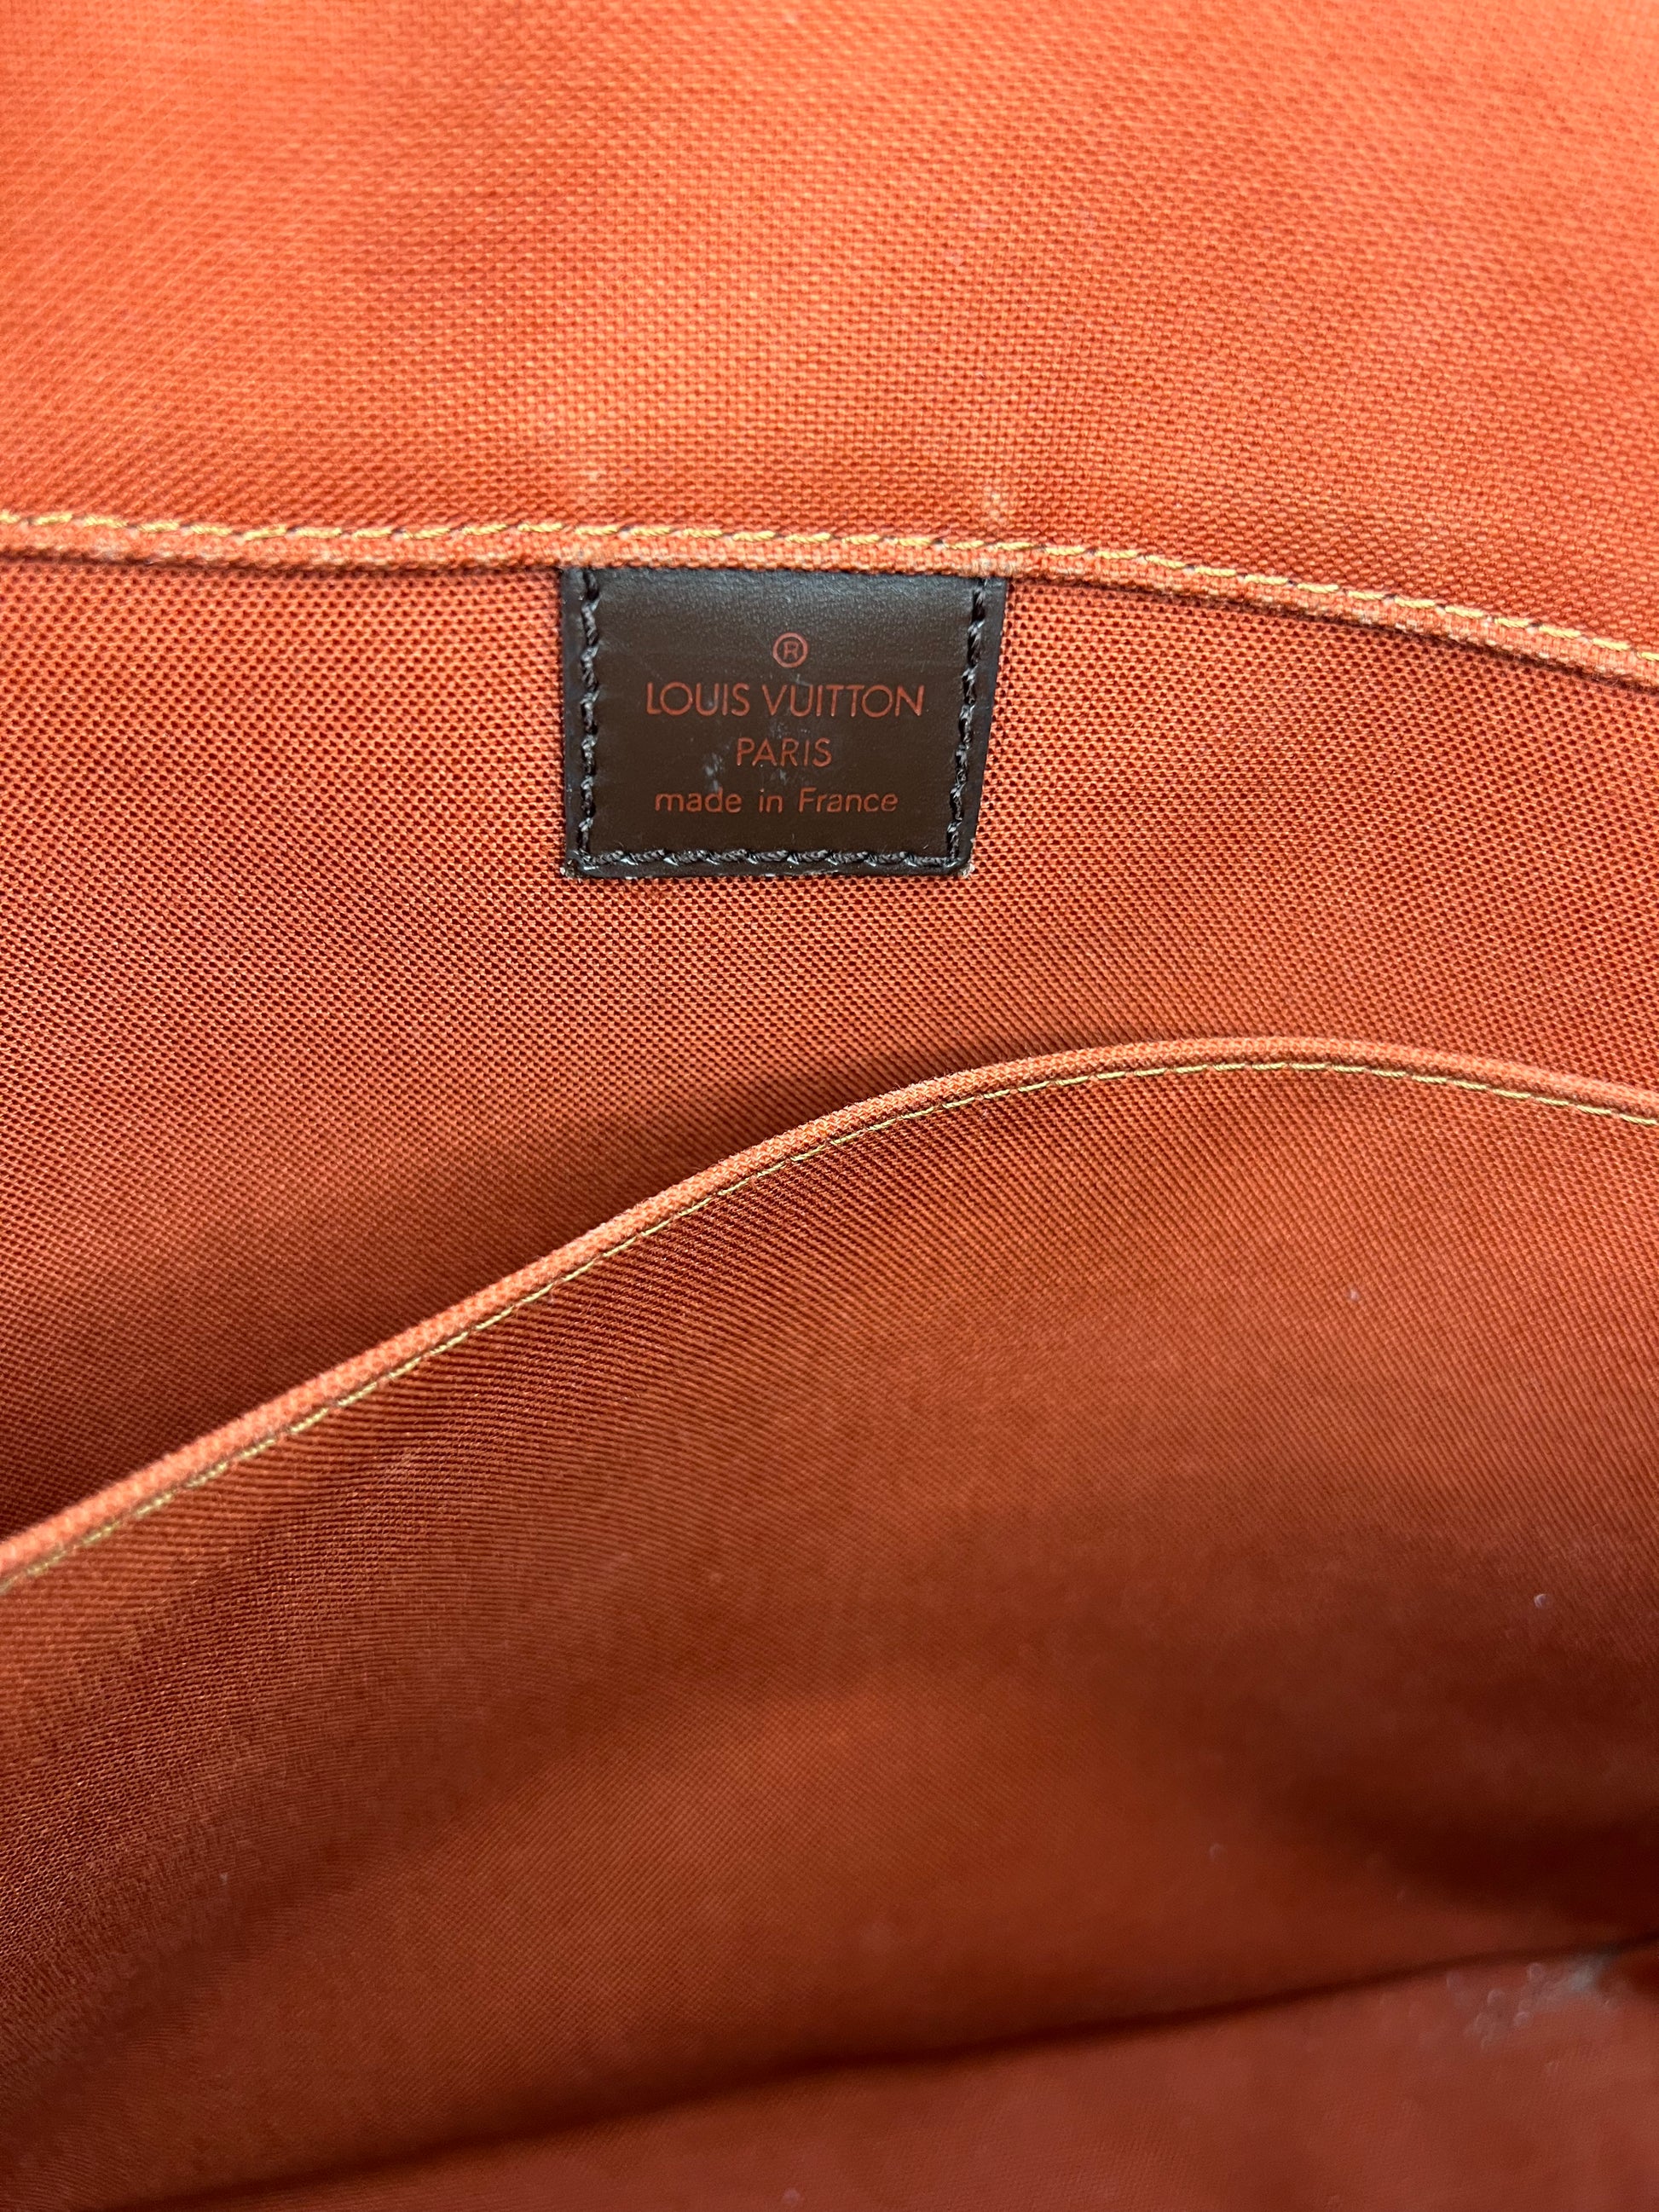 Louis Vuitton Damier Ebene Bastille Messenger Bag. Made in France.